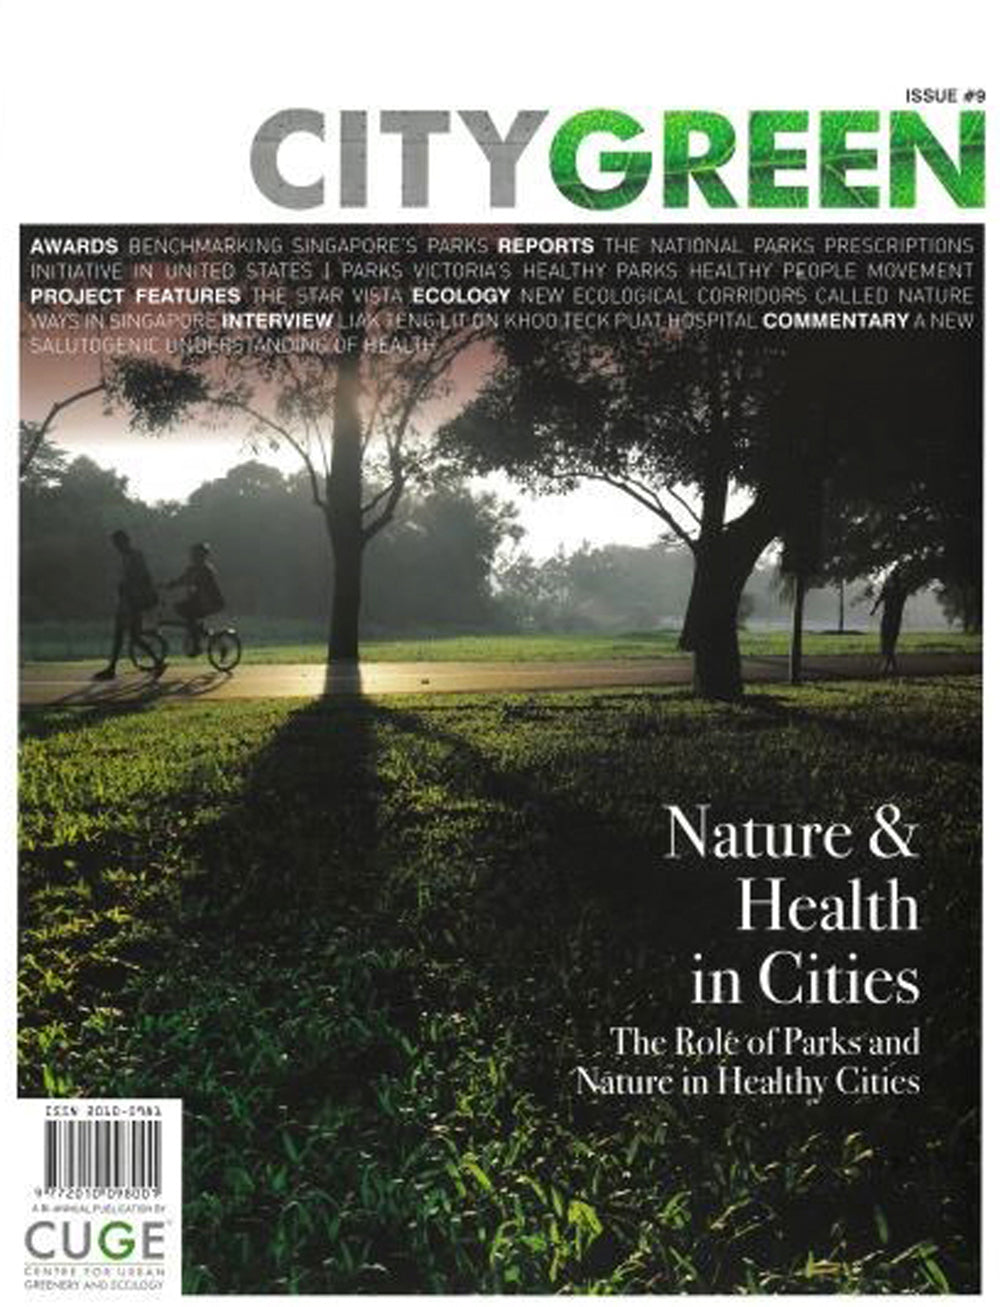 CITYGREEN Issue 09